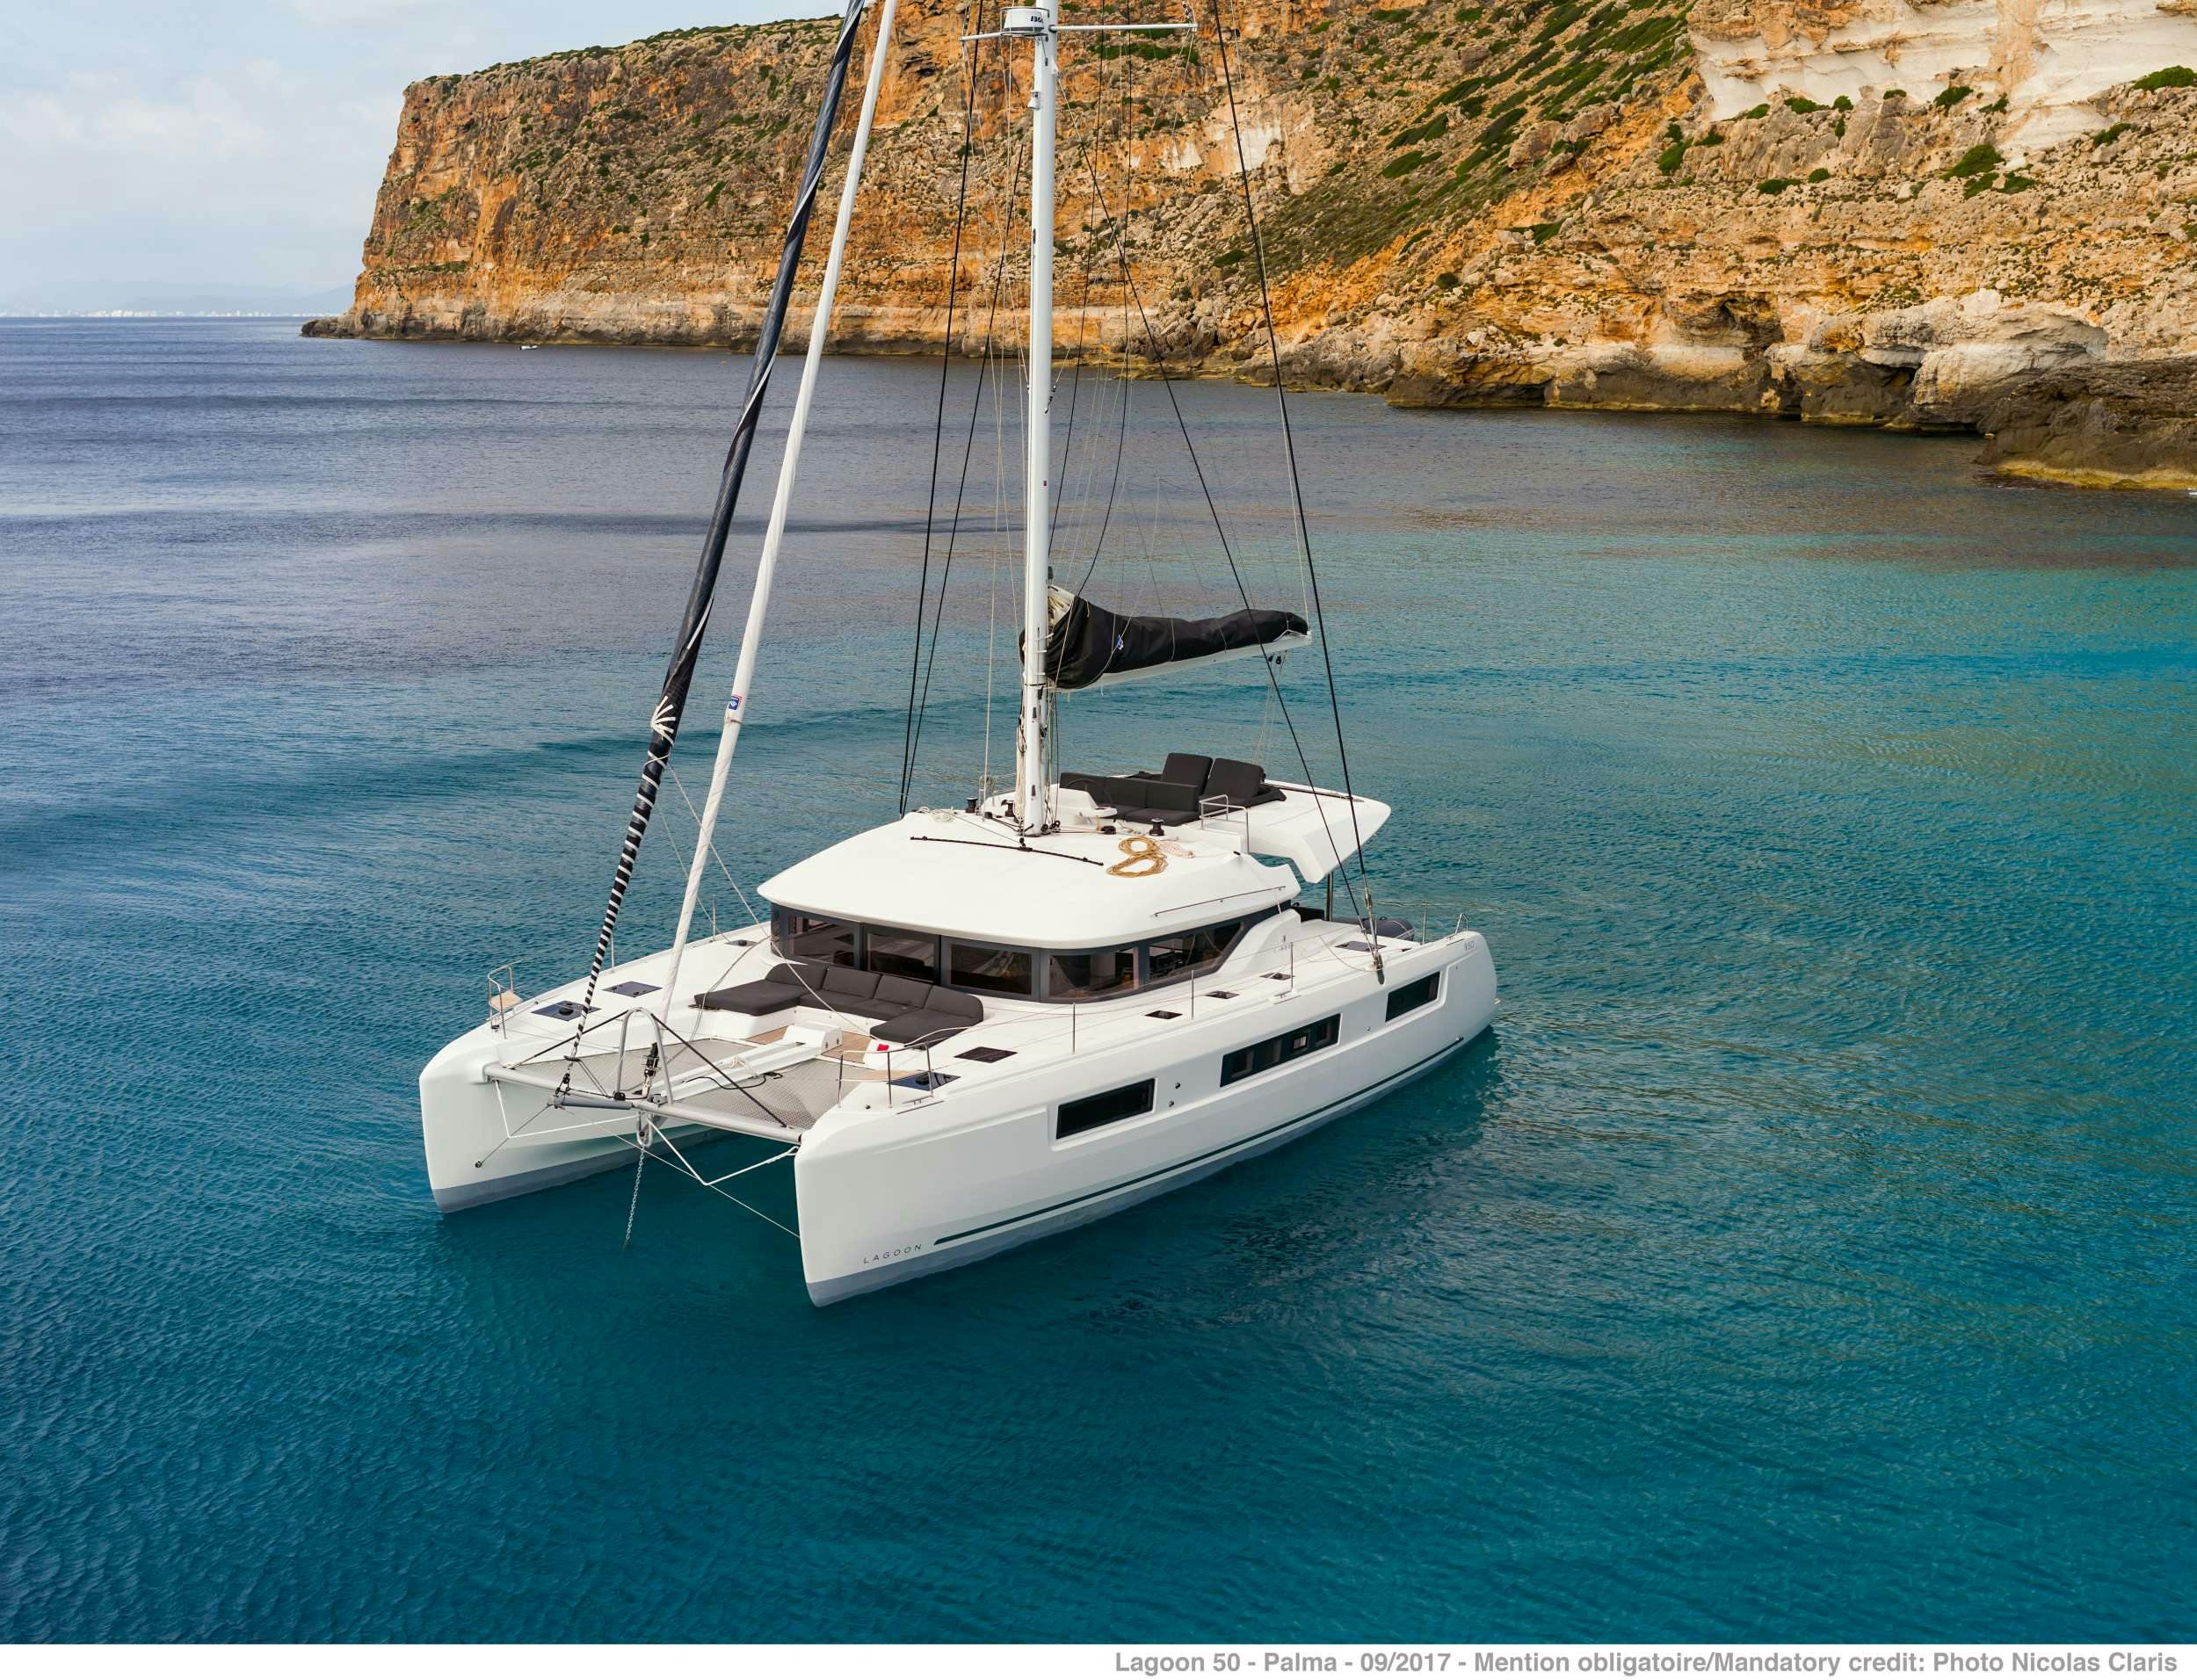 ONEIDA 2 - Yacht Charter Lindigo & Boat hire in Greece 1